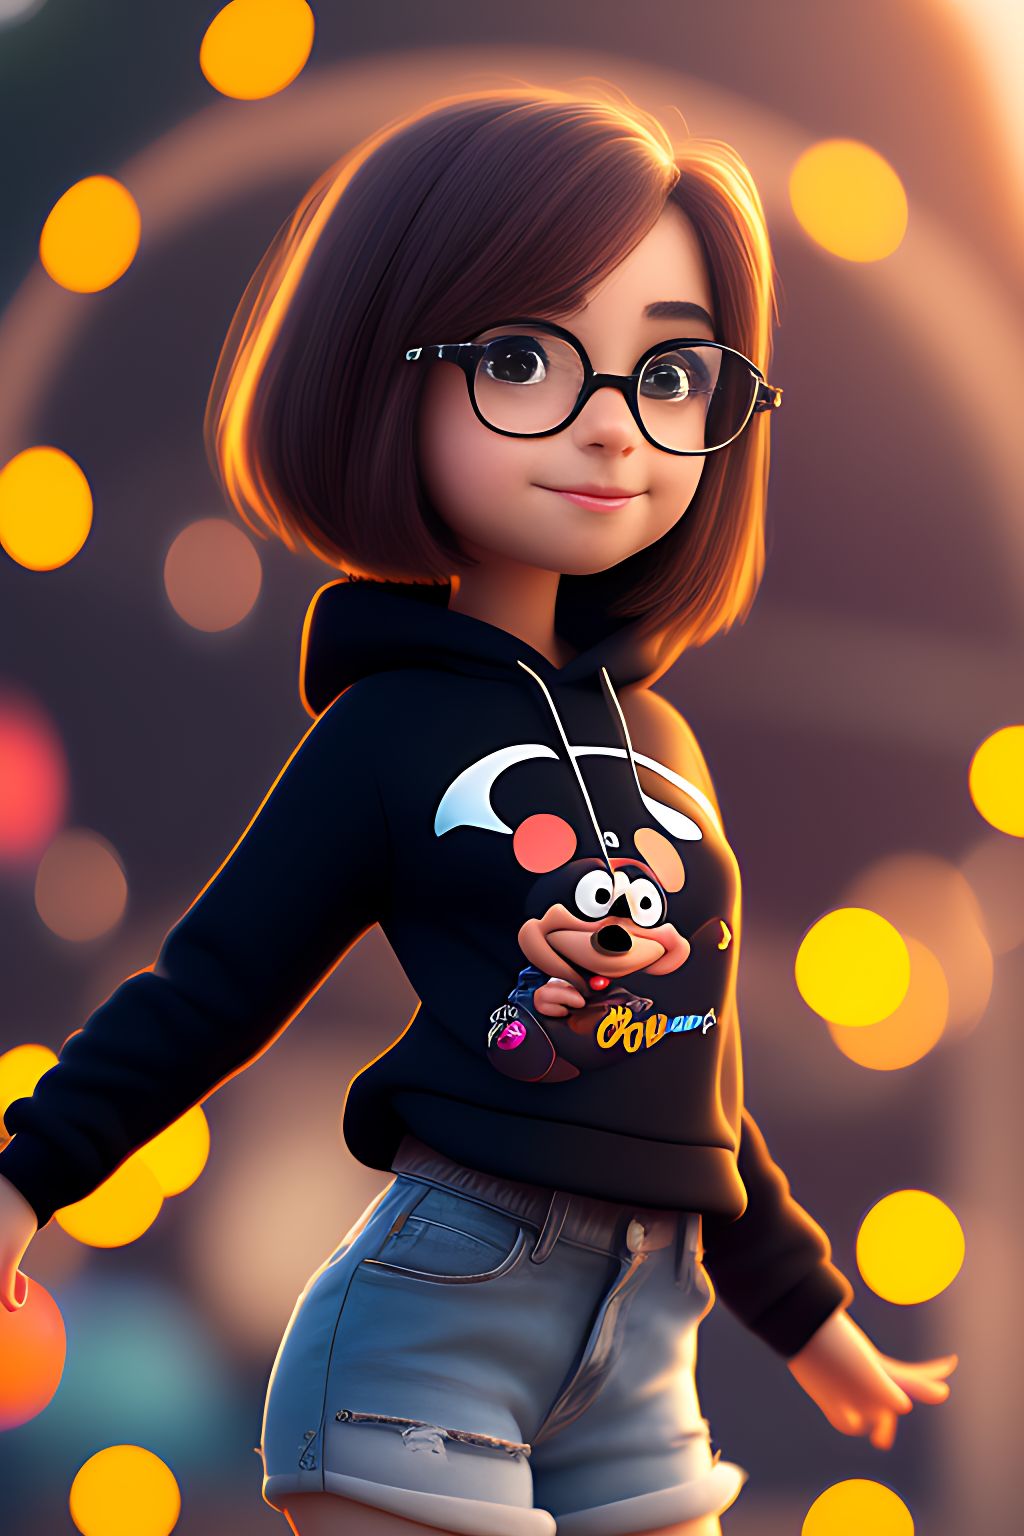 standing centered, Pixar style, 3d style, disney style, 8k, Beautiful, Cute girl, brown hair, black hoodie, glasses, close up, 3D, cute, A lot of depth, Bokeh, Hyper detailed, Fun,